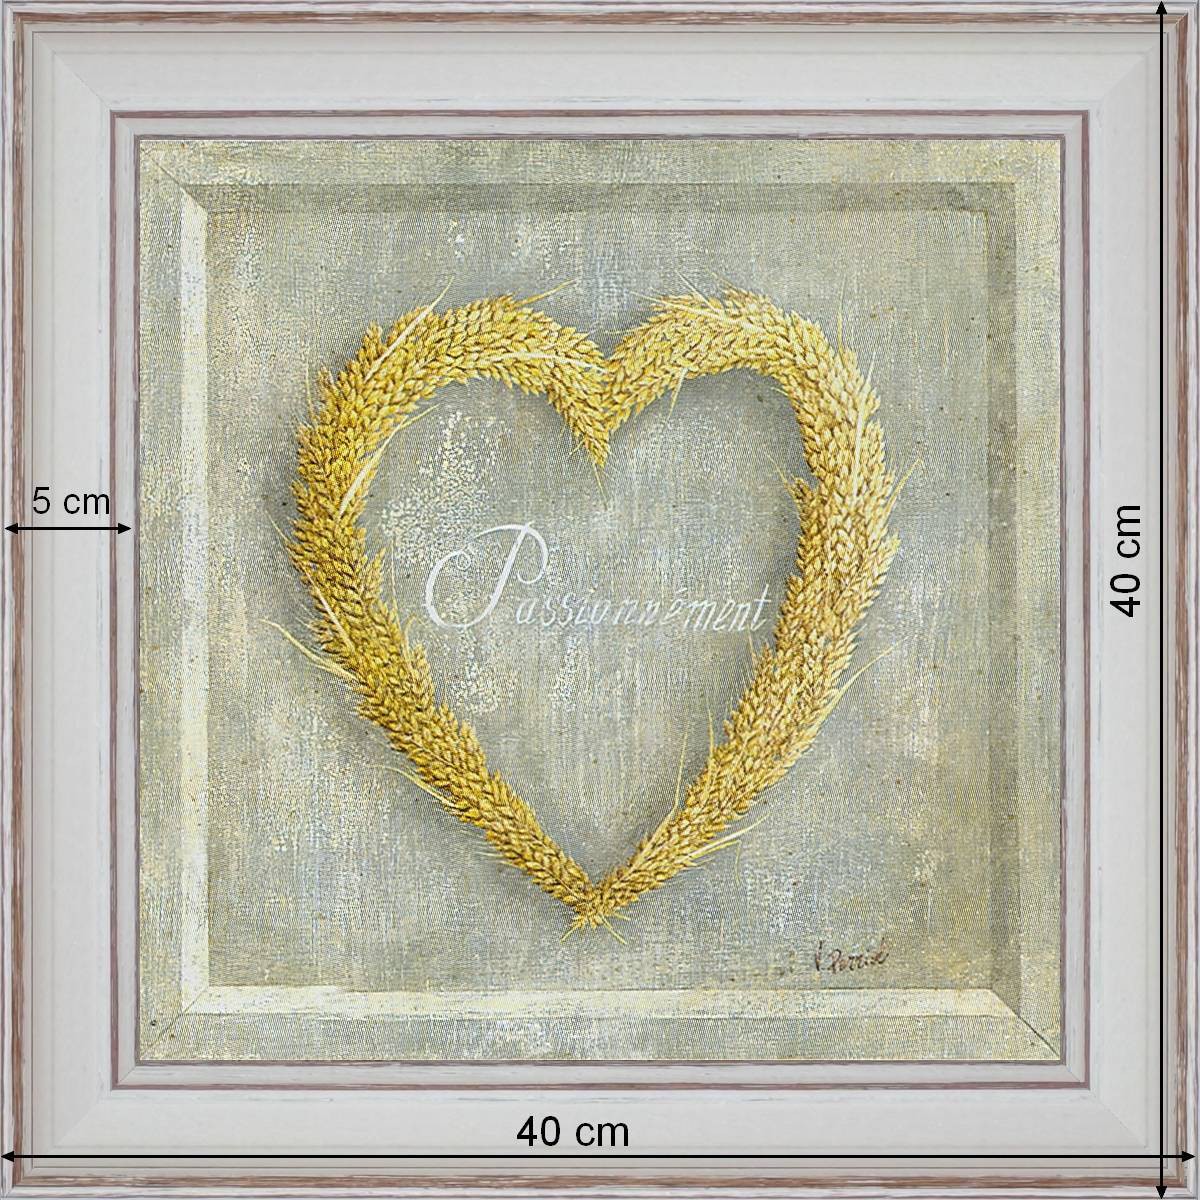 Corn  heart " Passionately " - dimensions 40 x 40 cm - White